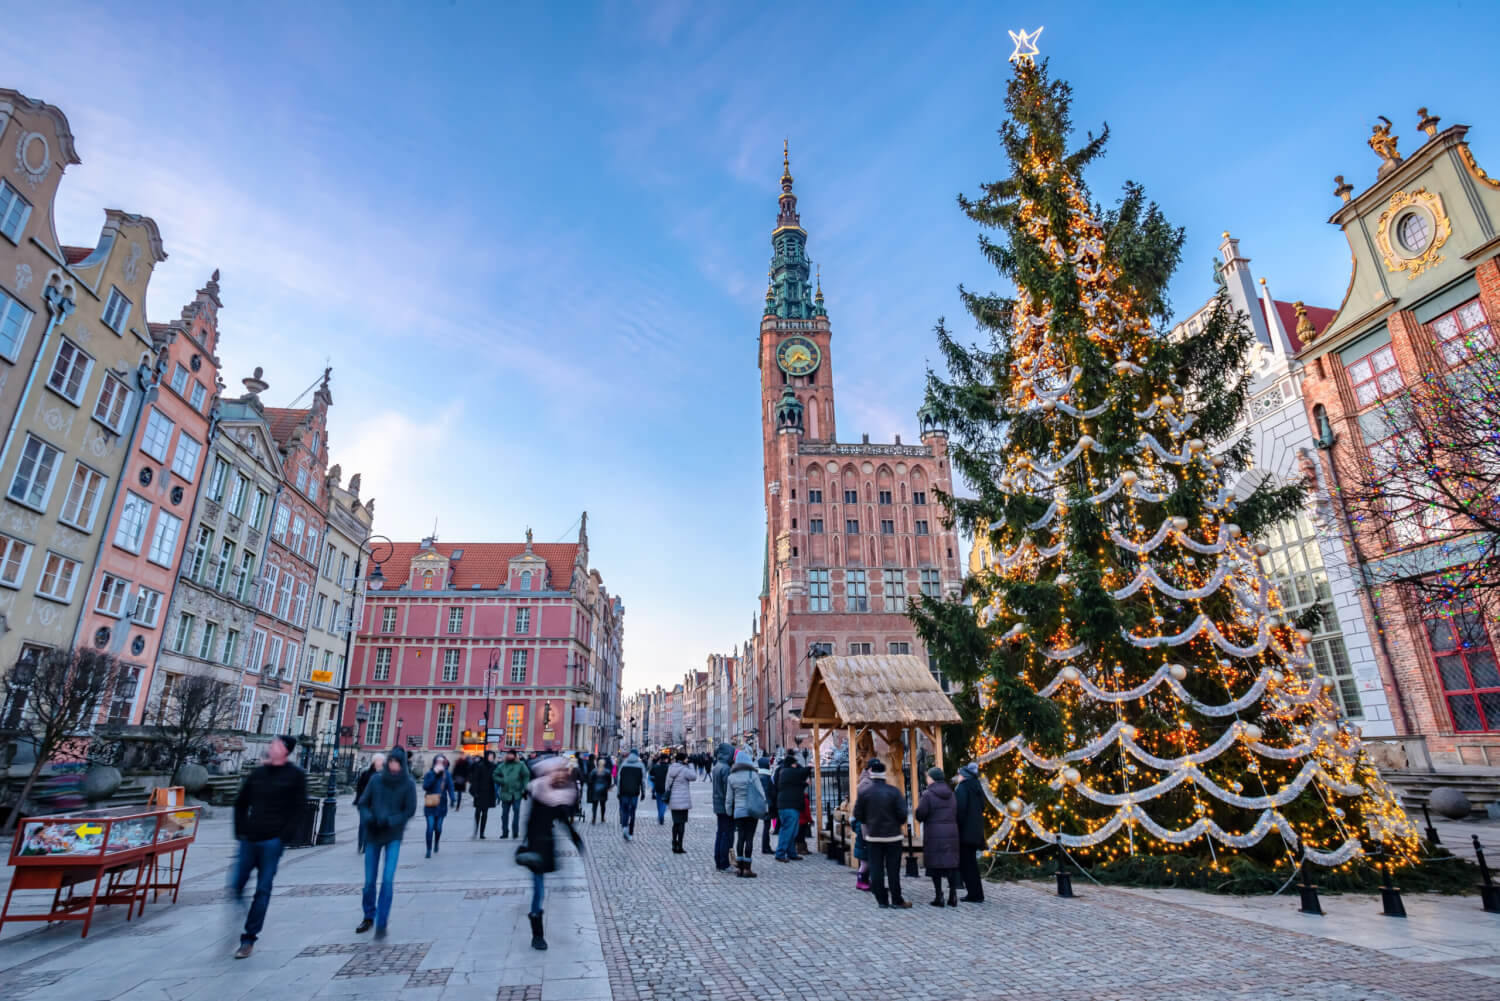 Gdańsk Christmas Market 2023 Dates, Locations & MustKnows